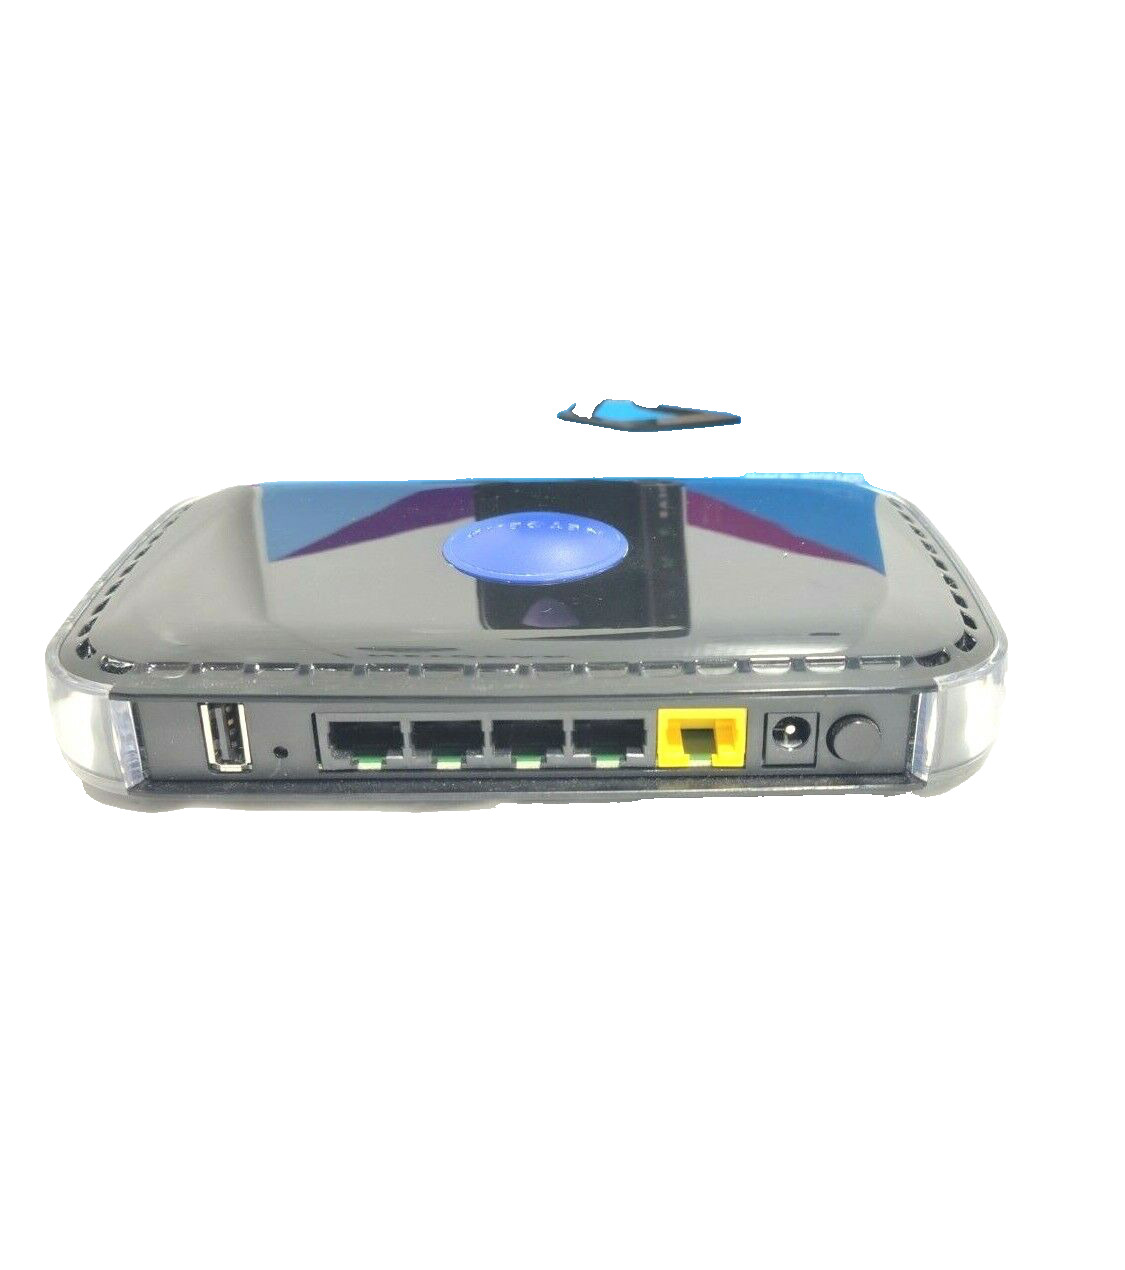 Netgear N600 Wireless Dual Band Wi-Fi Router WNDR3400v3